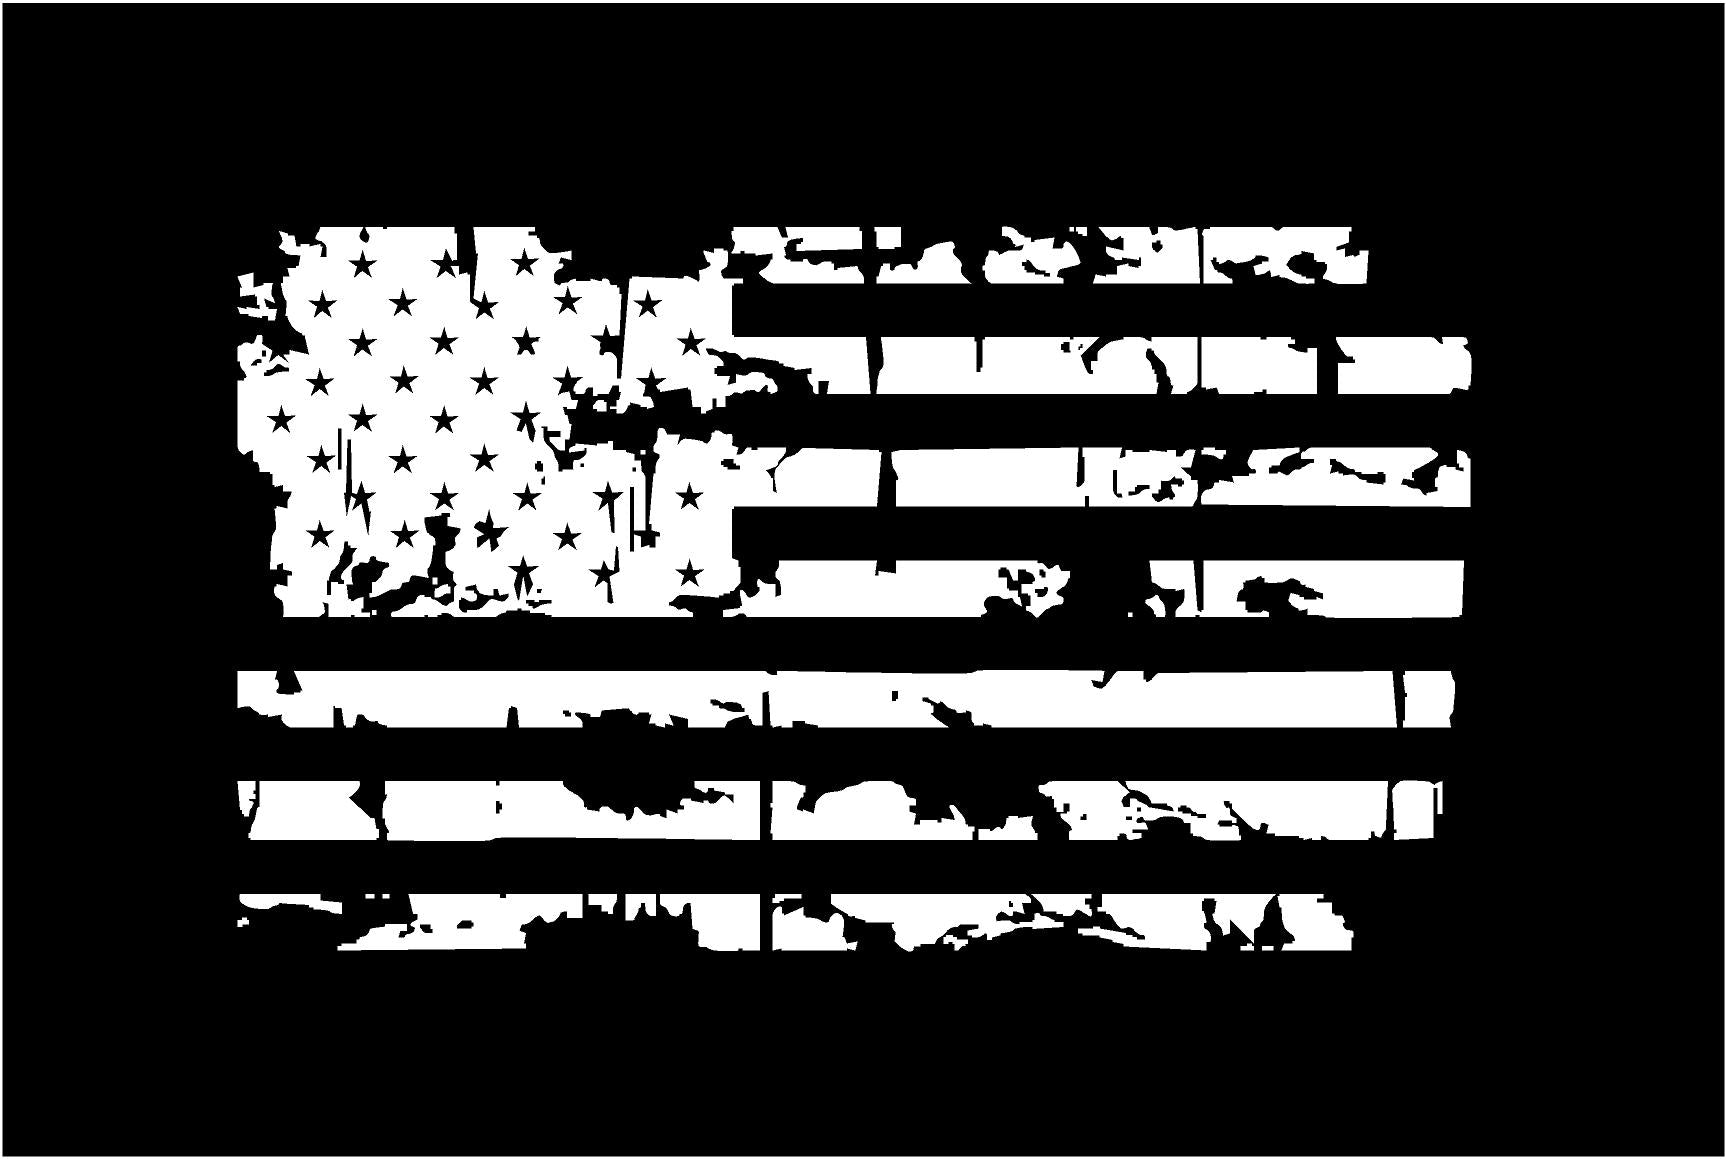 Deplorable Distressed American Flag Vinyl Decal Sticker